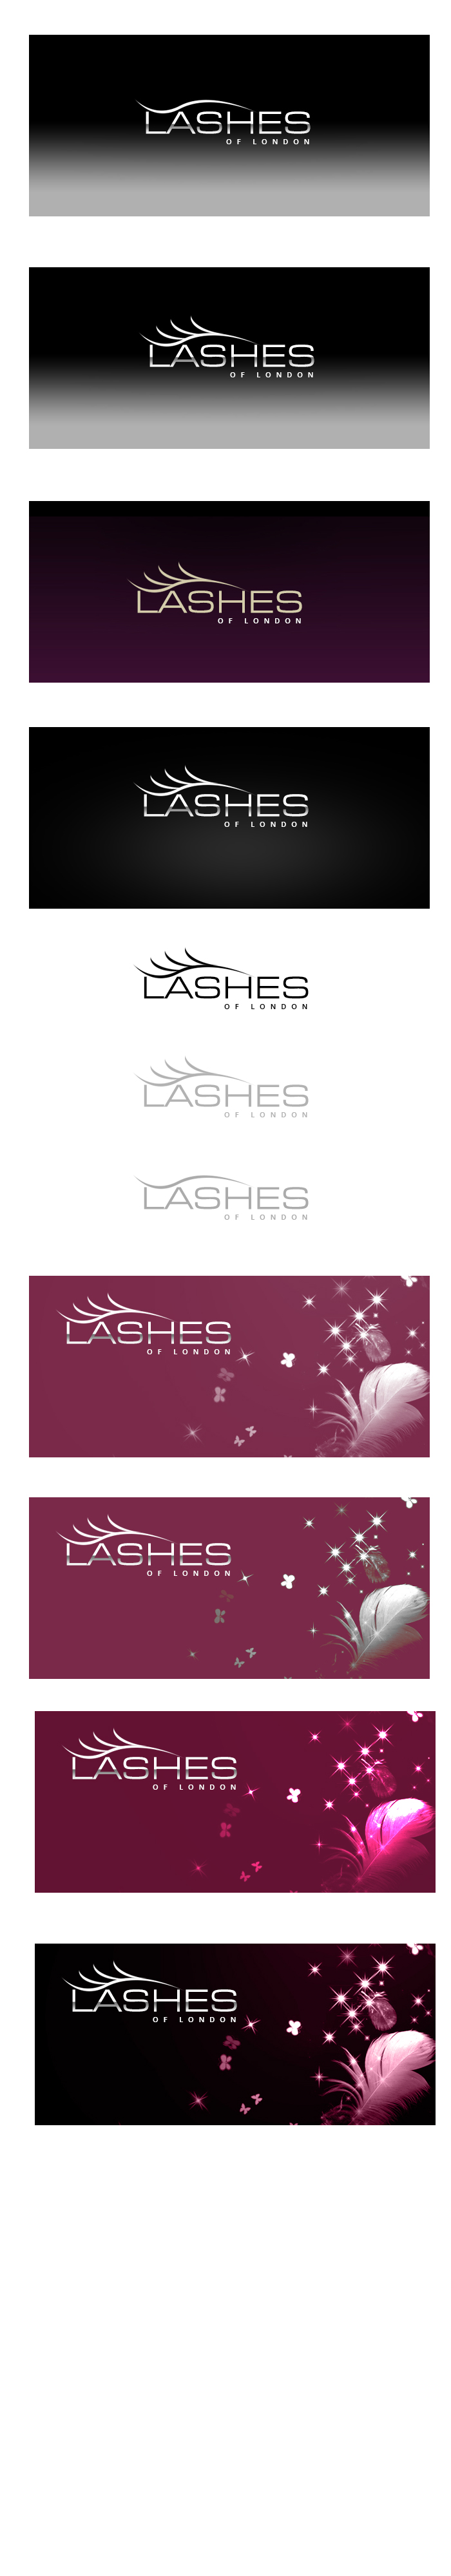 lashes_logos